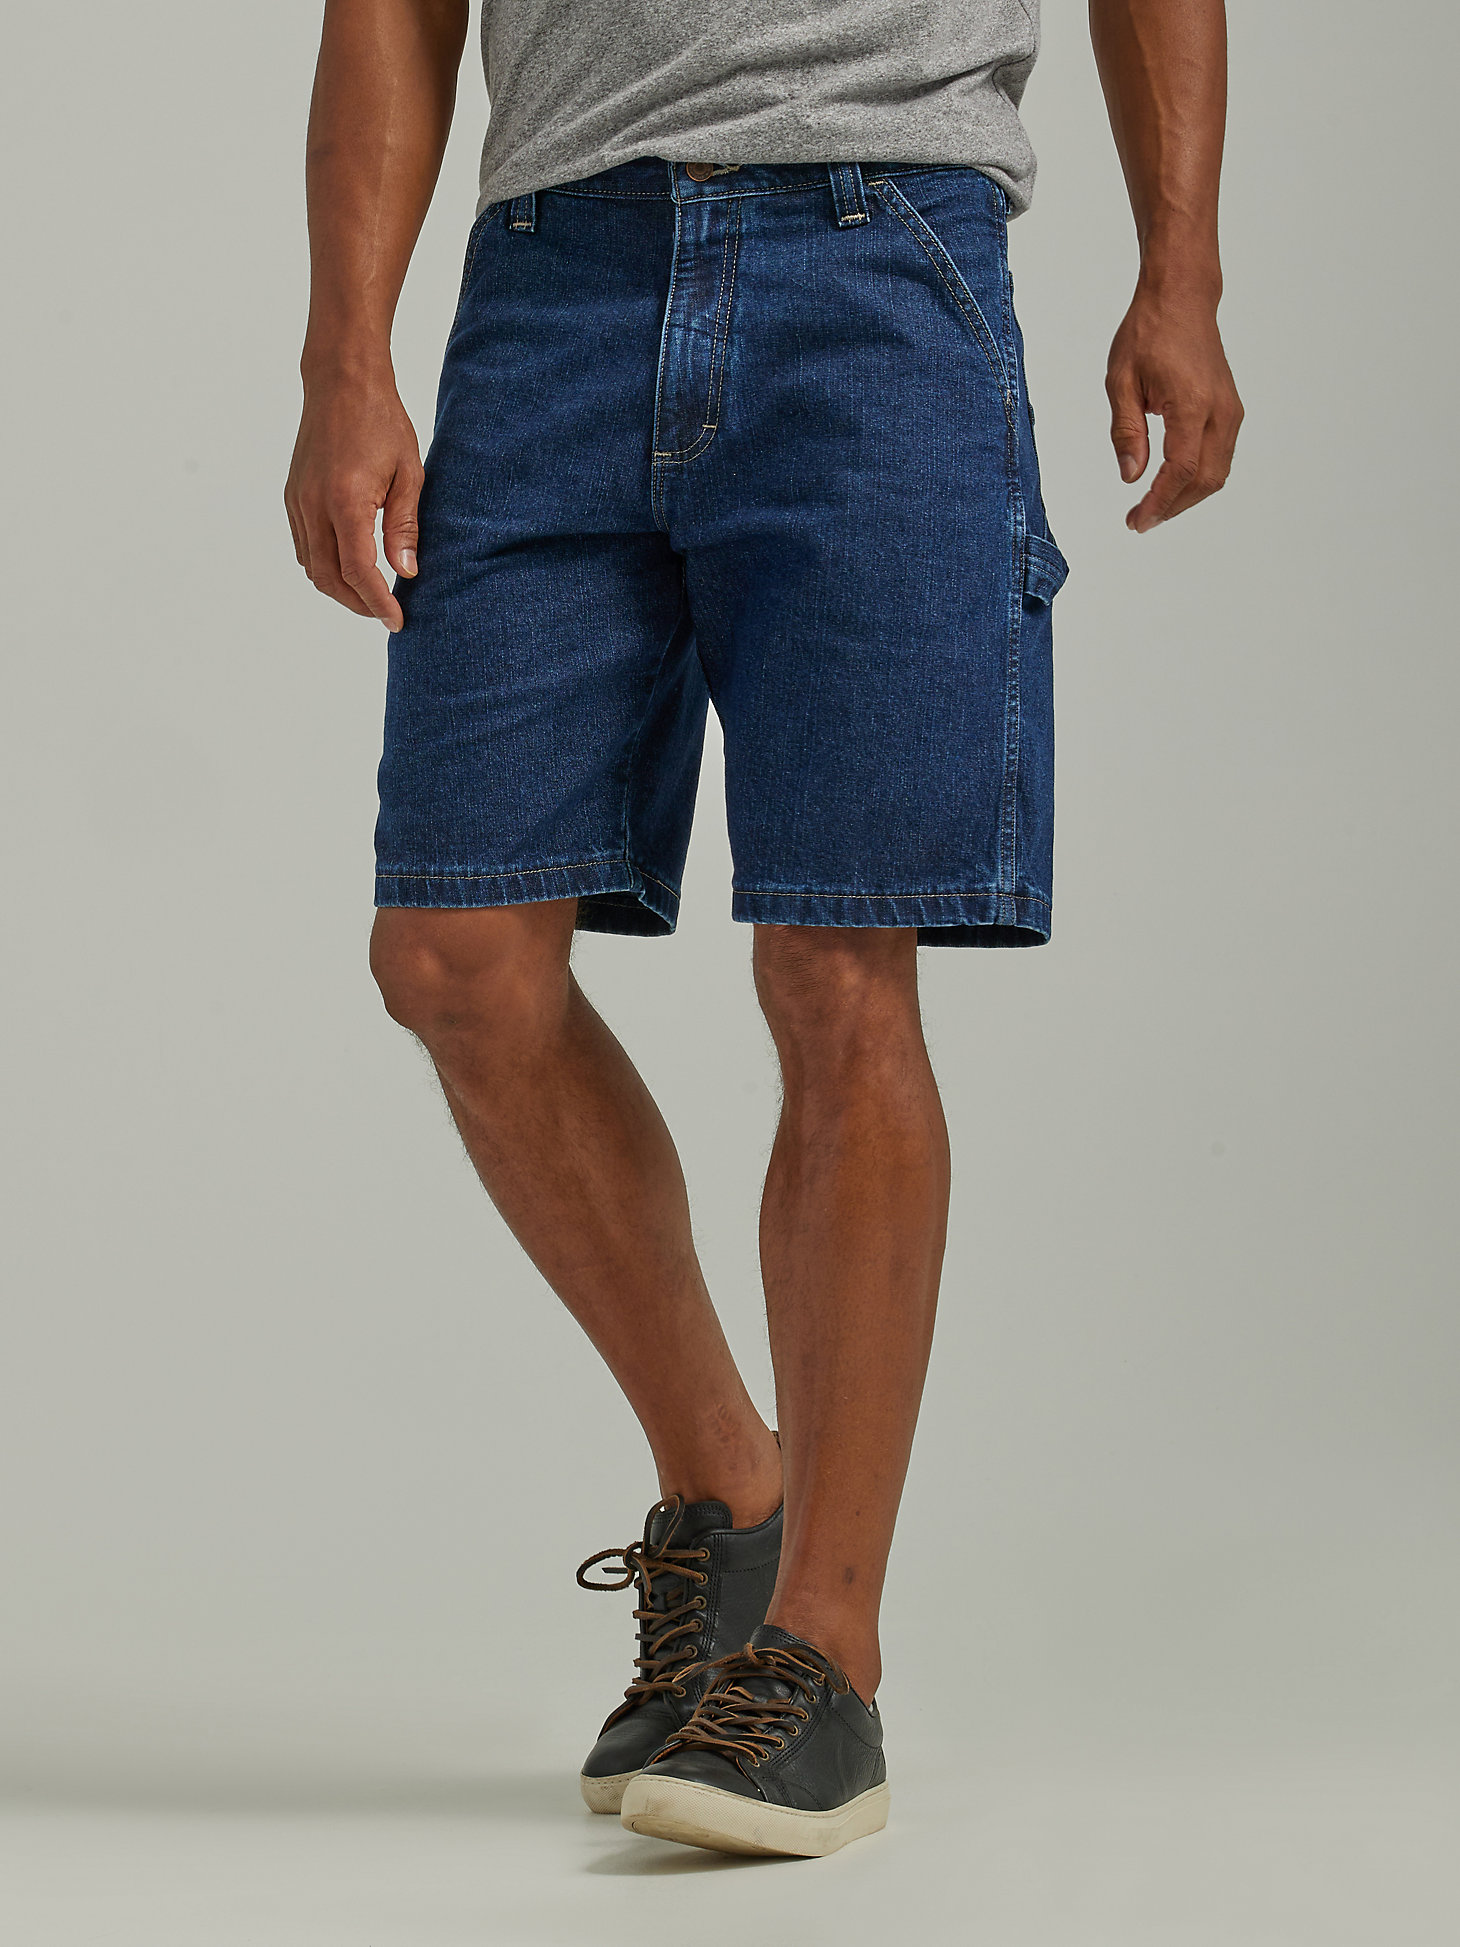 Men's Wrangler® Five Star Premium Carpenter Shorts in Dark Vintage main view